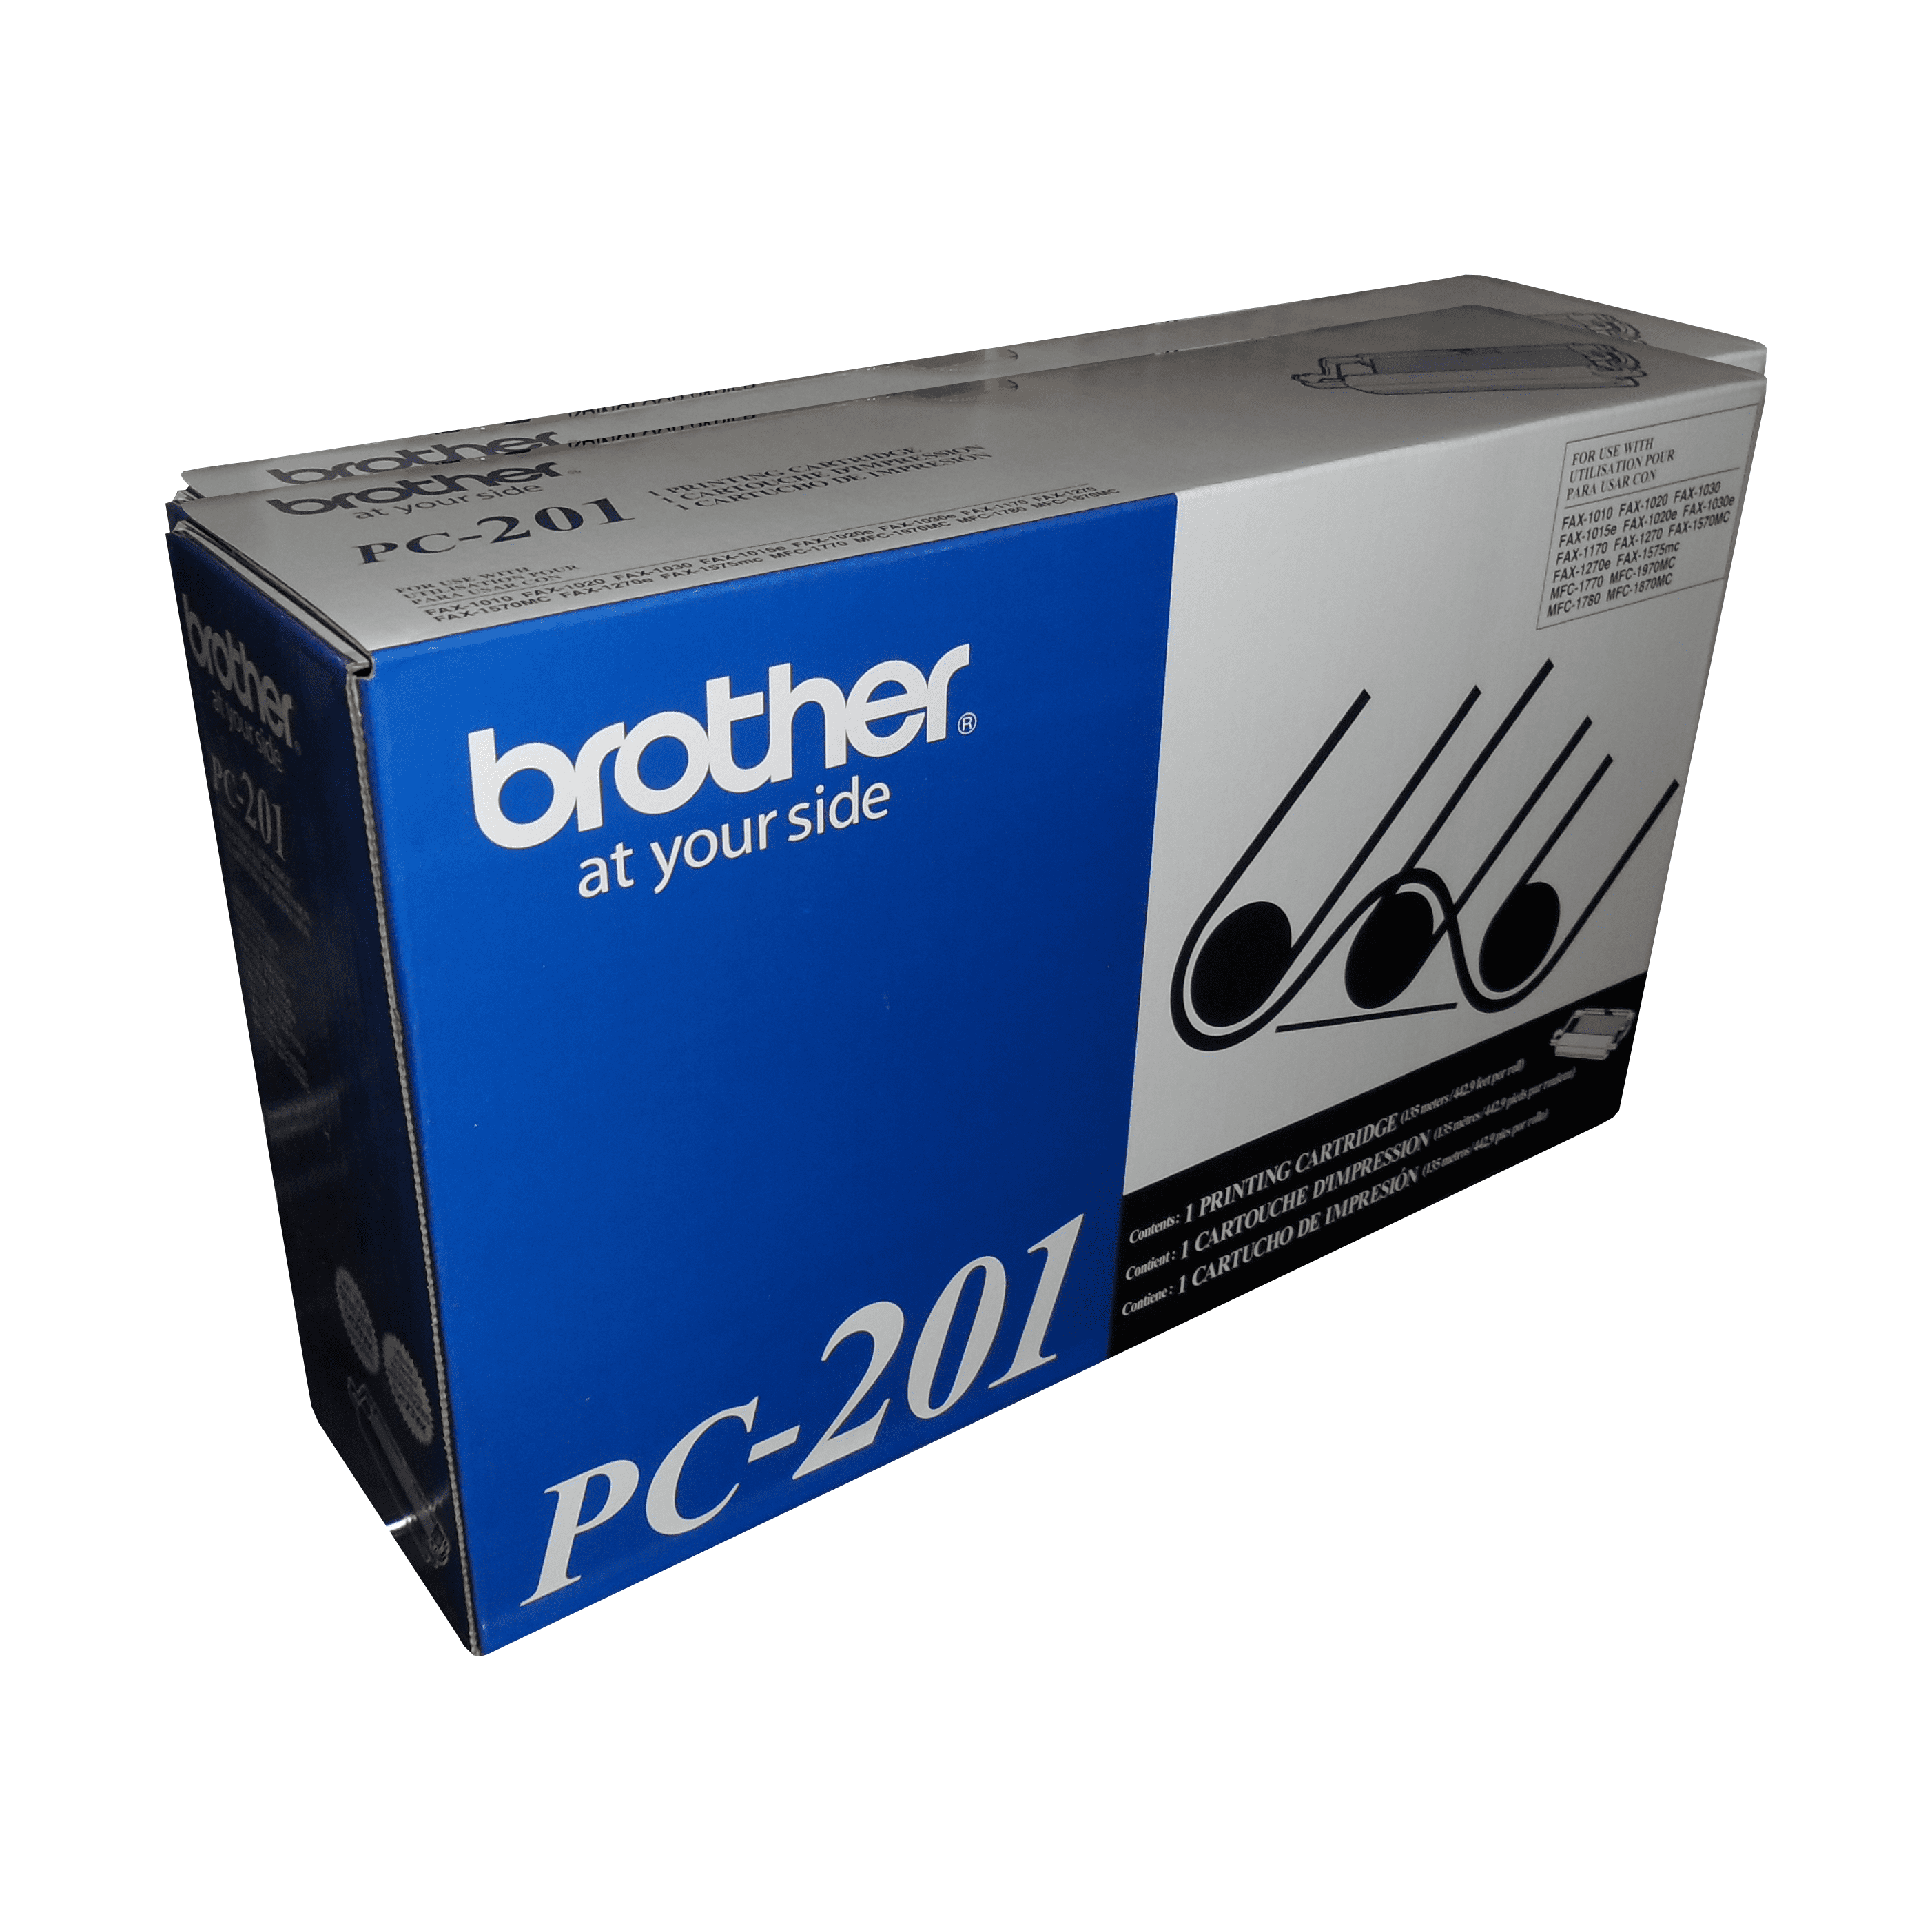 Brother PC201 Print Cartridge - toners.ca